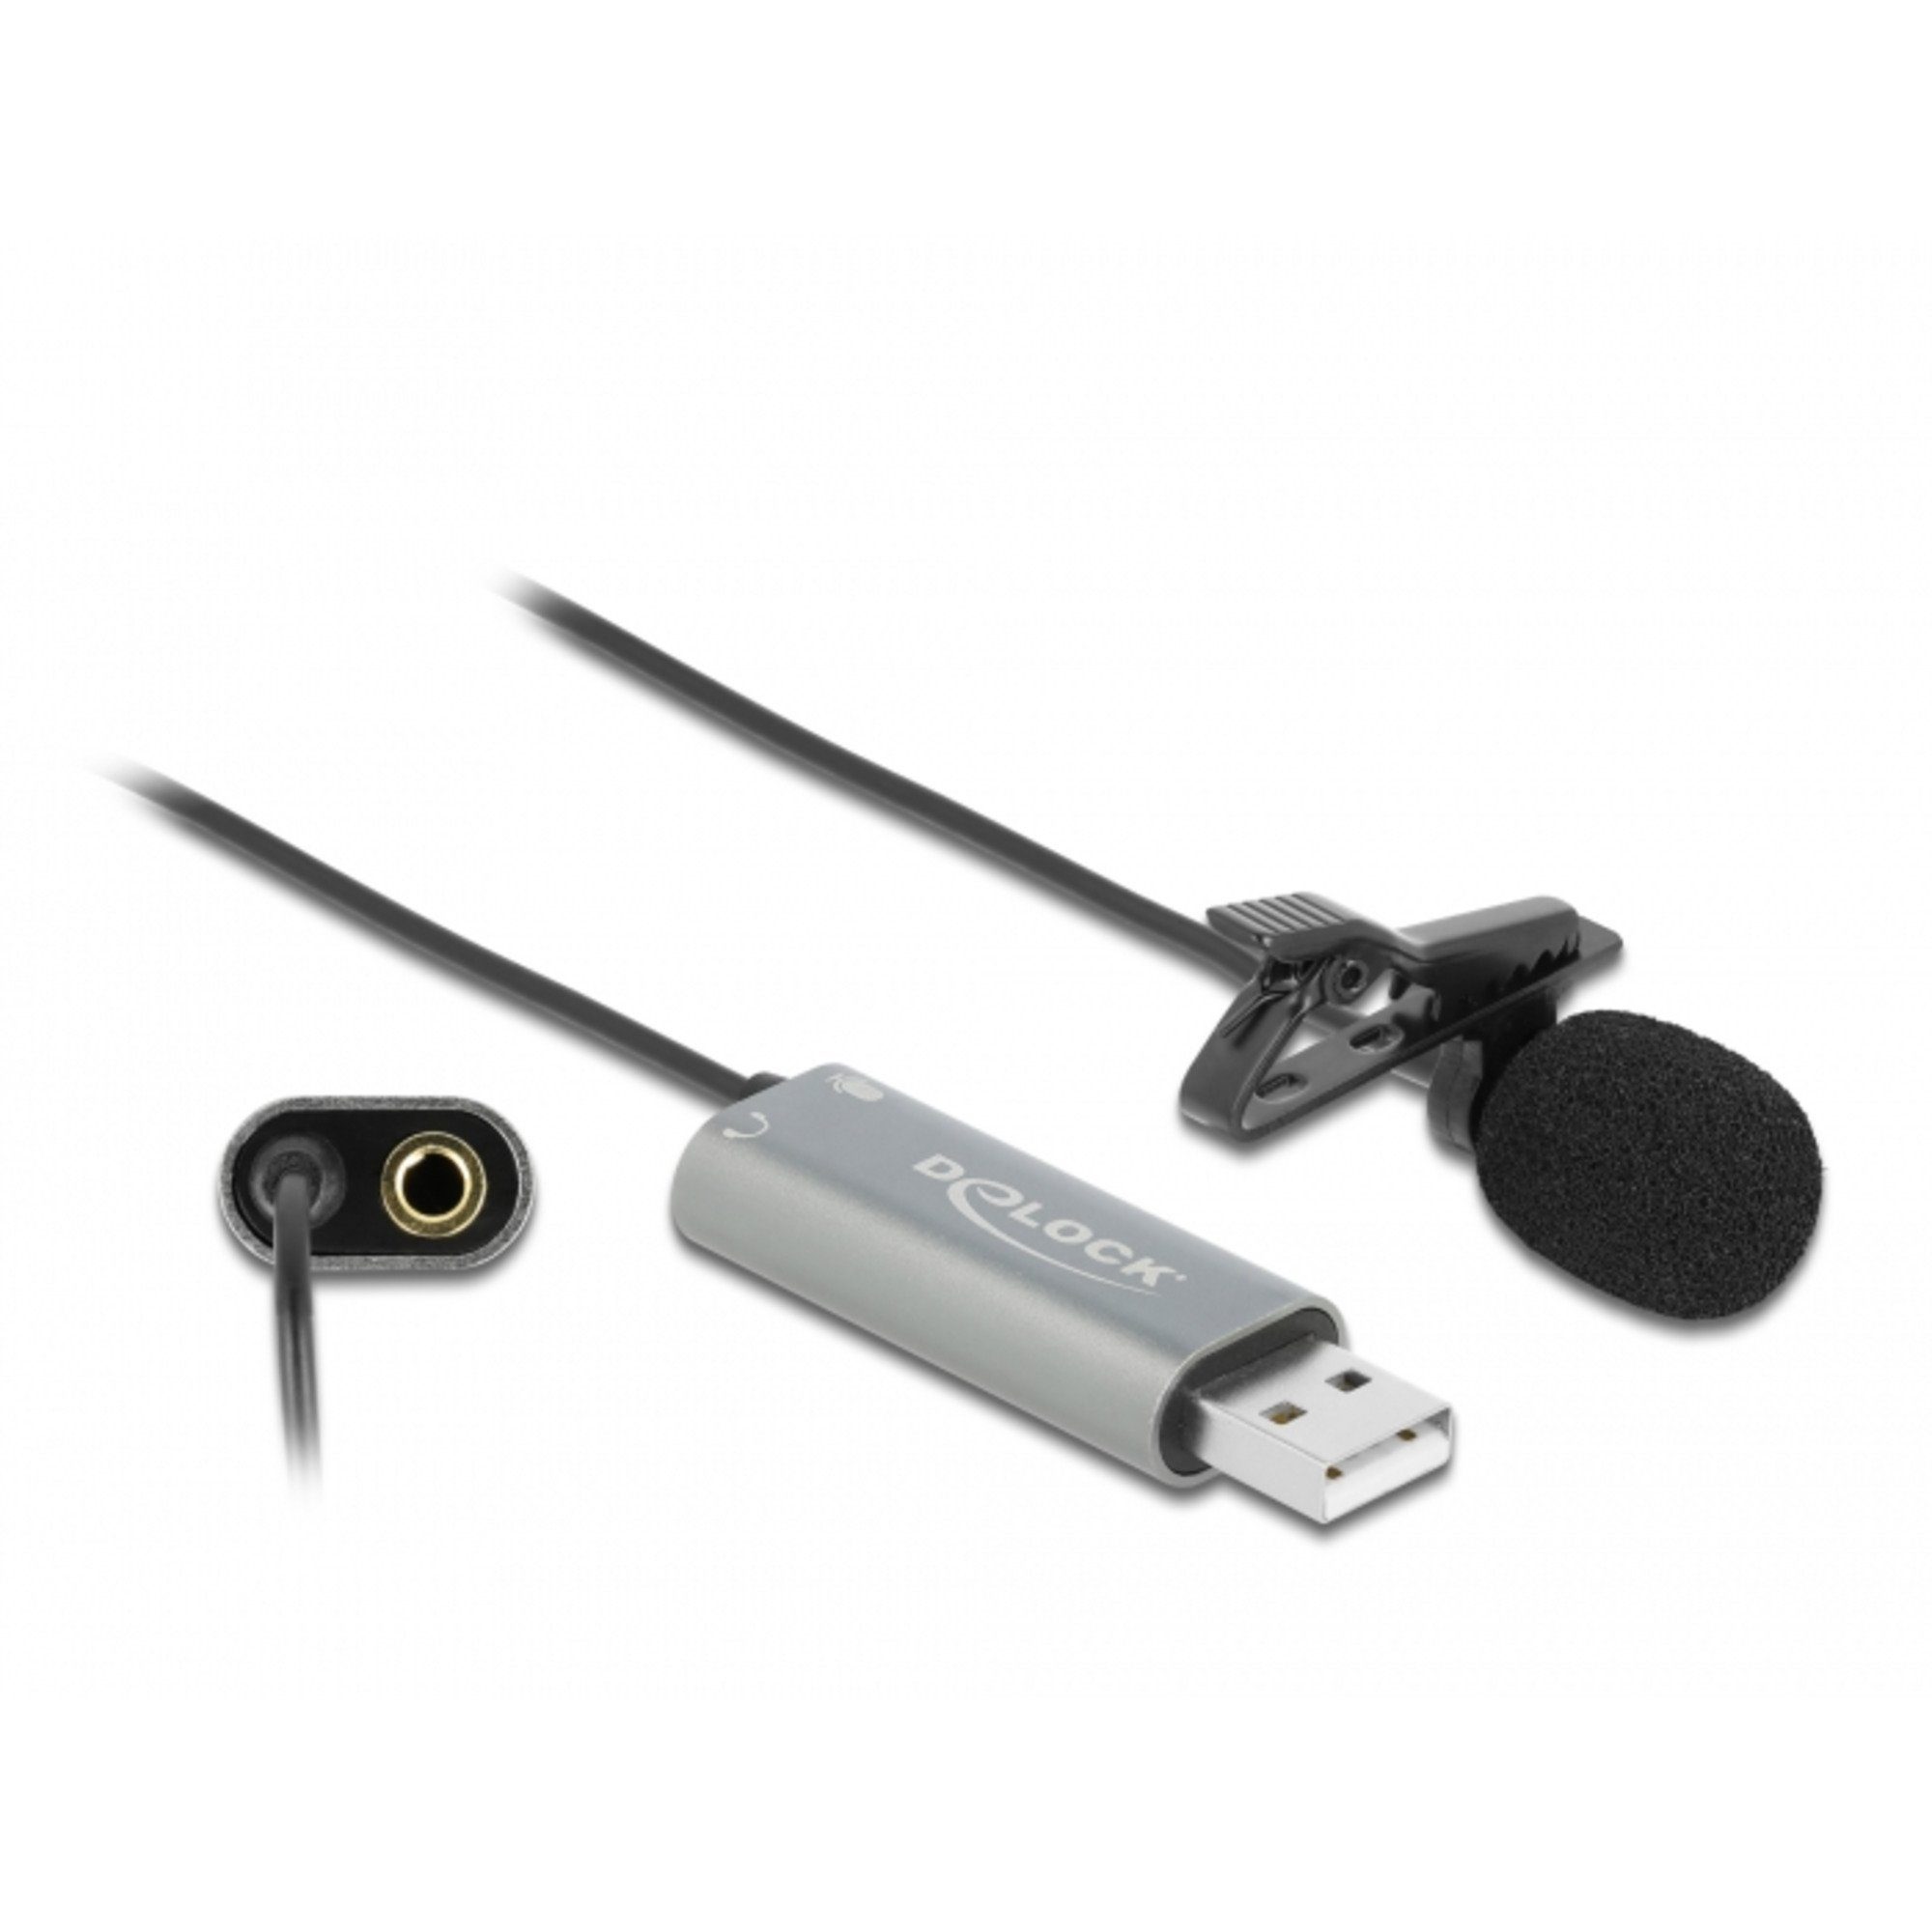 Delock DeLOCK Krawatten USB (Klinke) Mikrofon, Gaming-Headset